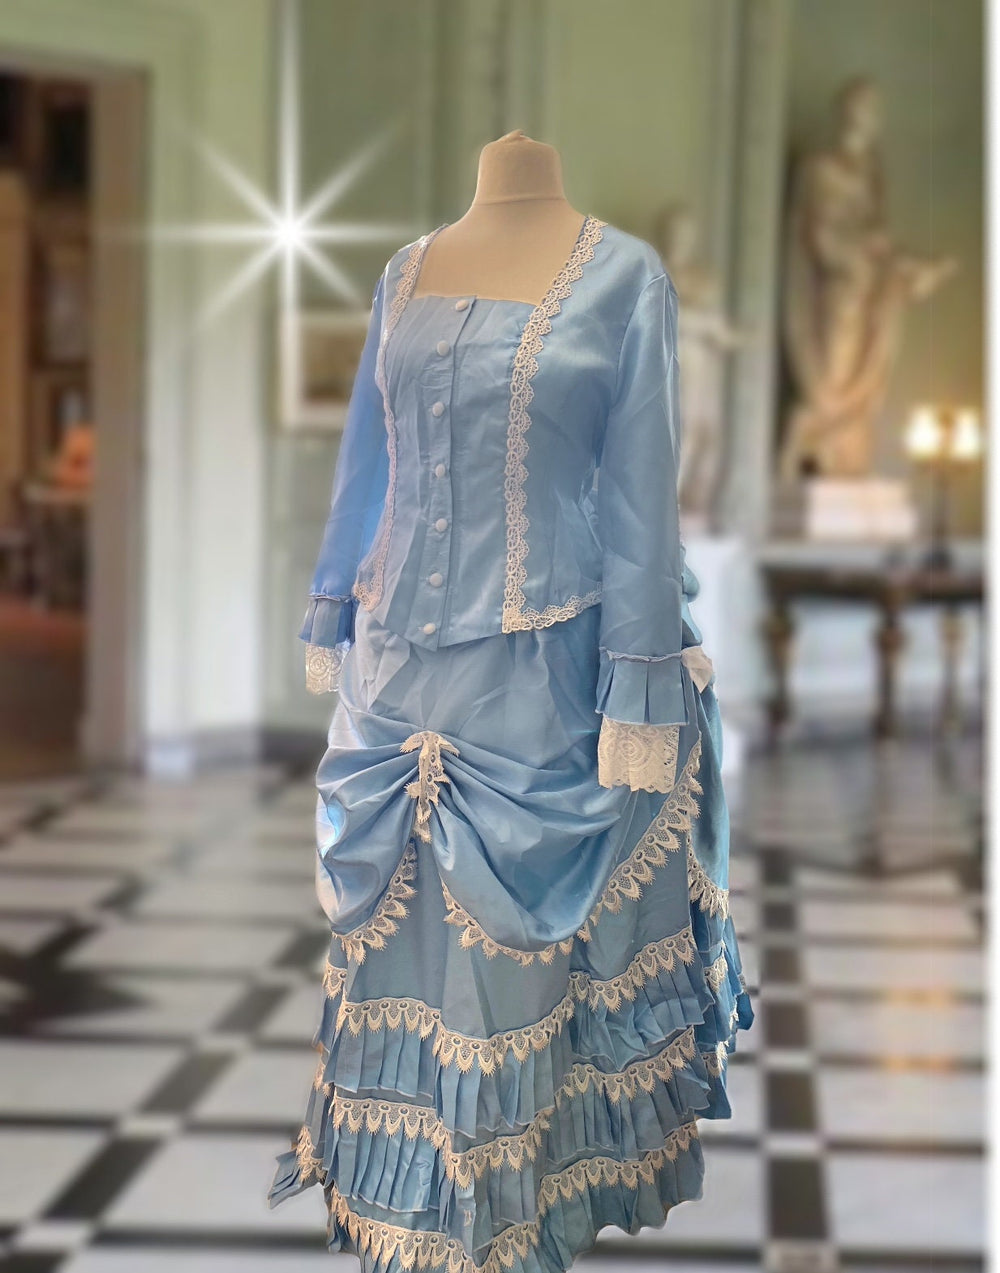 Blue Victorian dress, bustle dress, Gilded Cage Dress, Victoriana,Civil War Dress